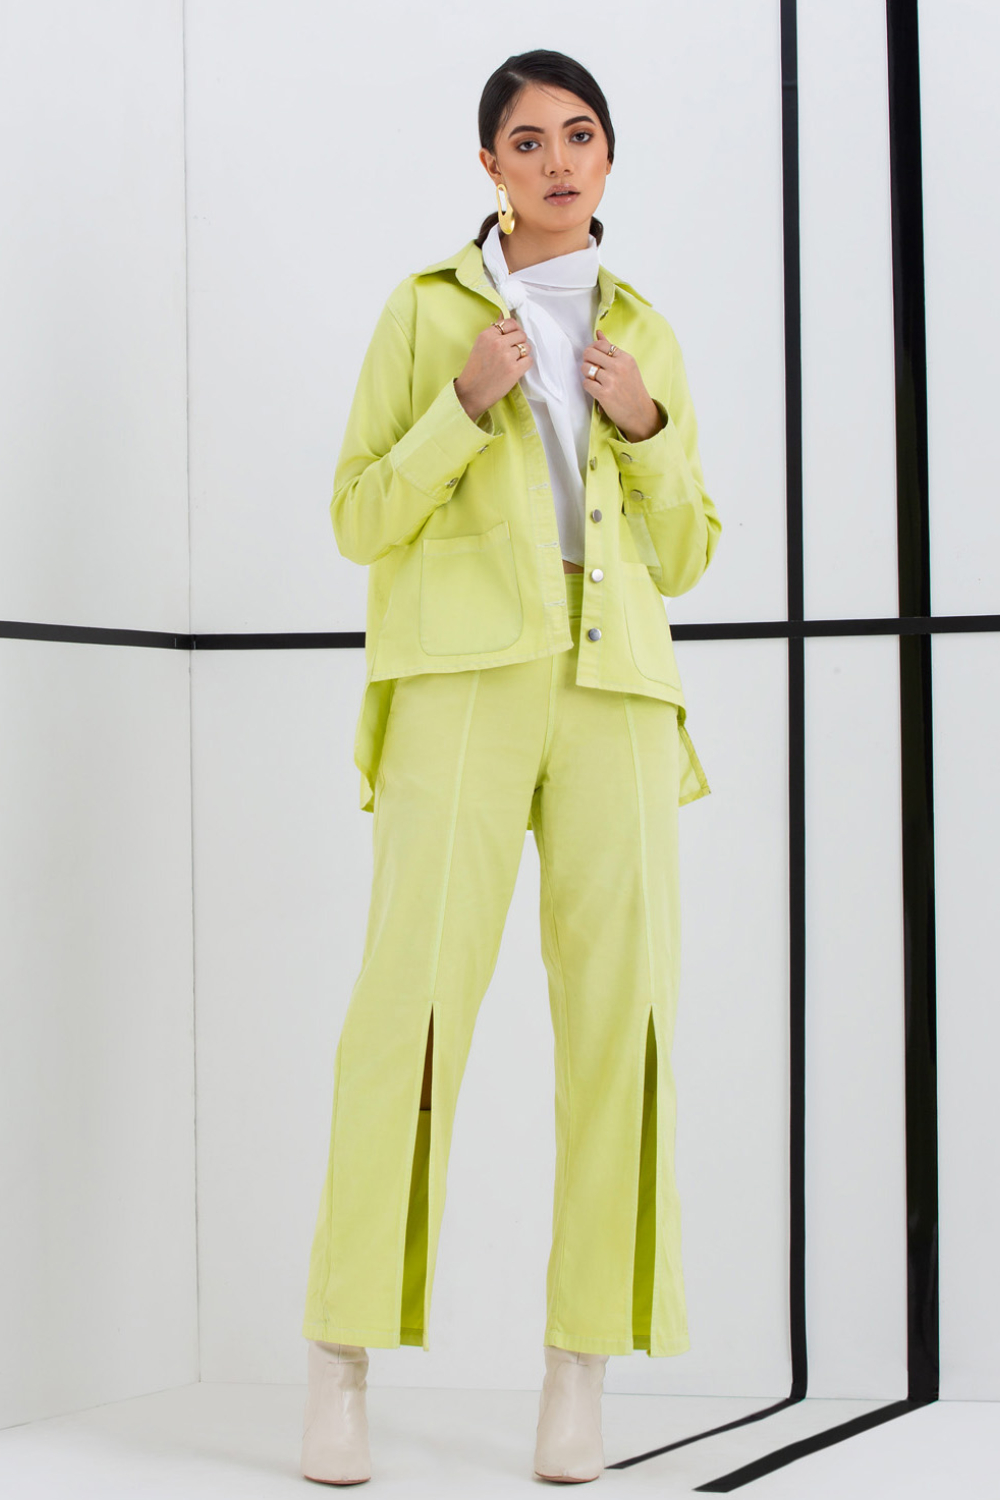 The Antoinette Neon Denim Jacket & Pant Set